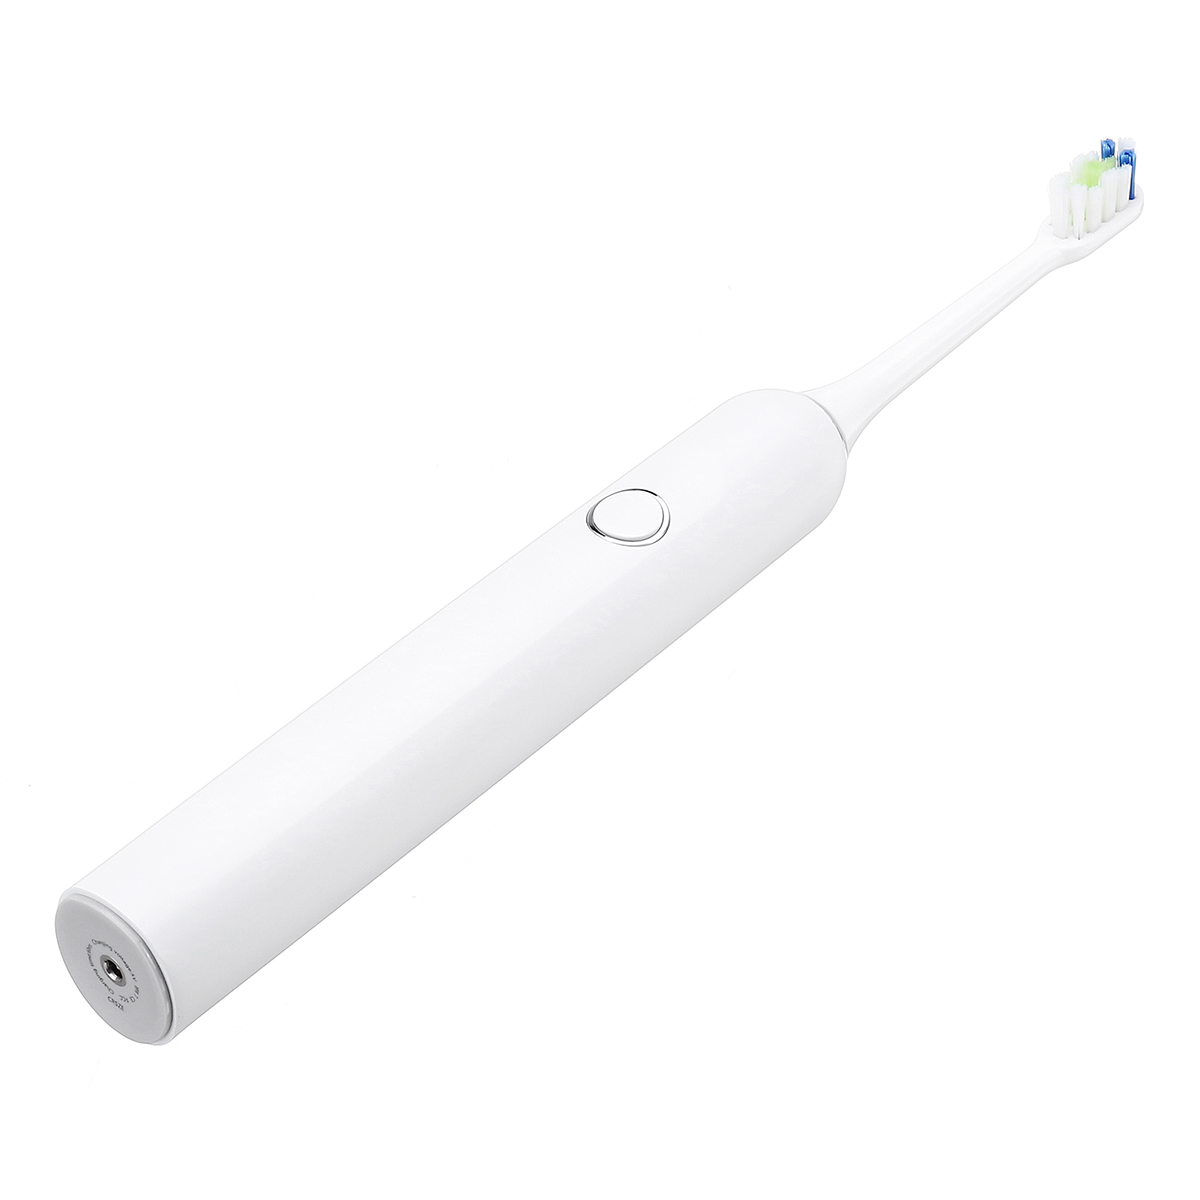 Waterproof-Rechargeable-Sonic-Electrric-Toothbrush-Upgraded-Ultrasonic-Electric-Toothbrush-1361114-10